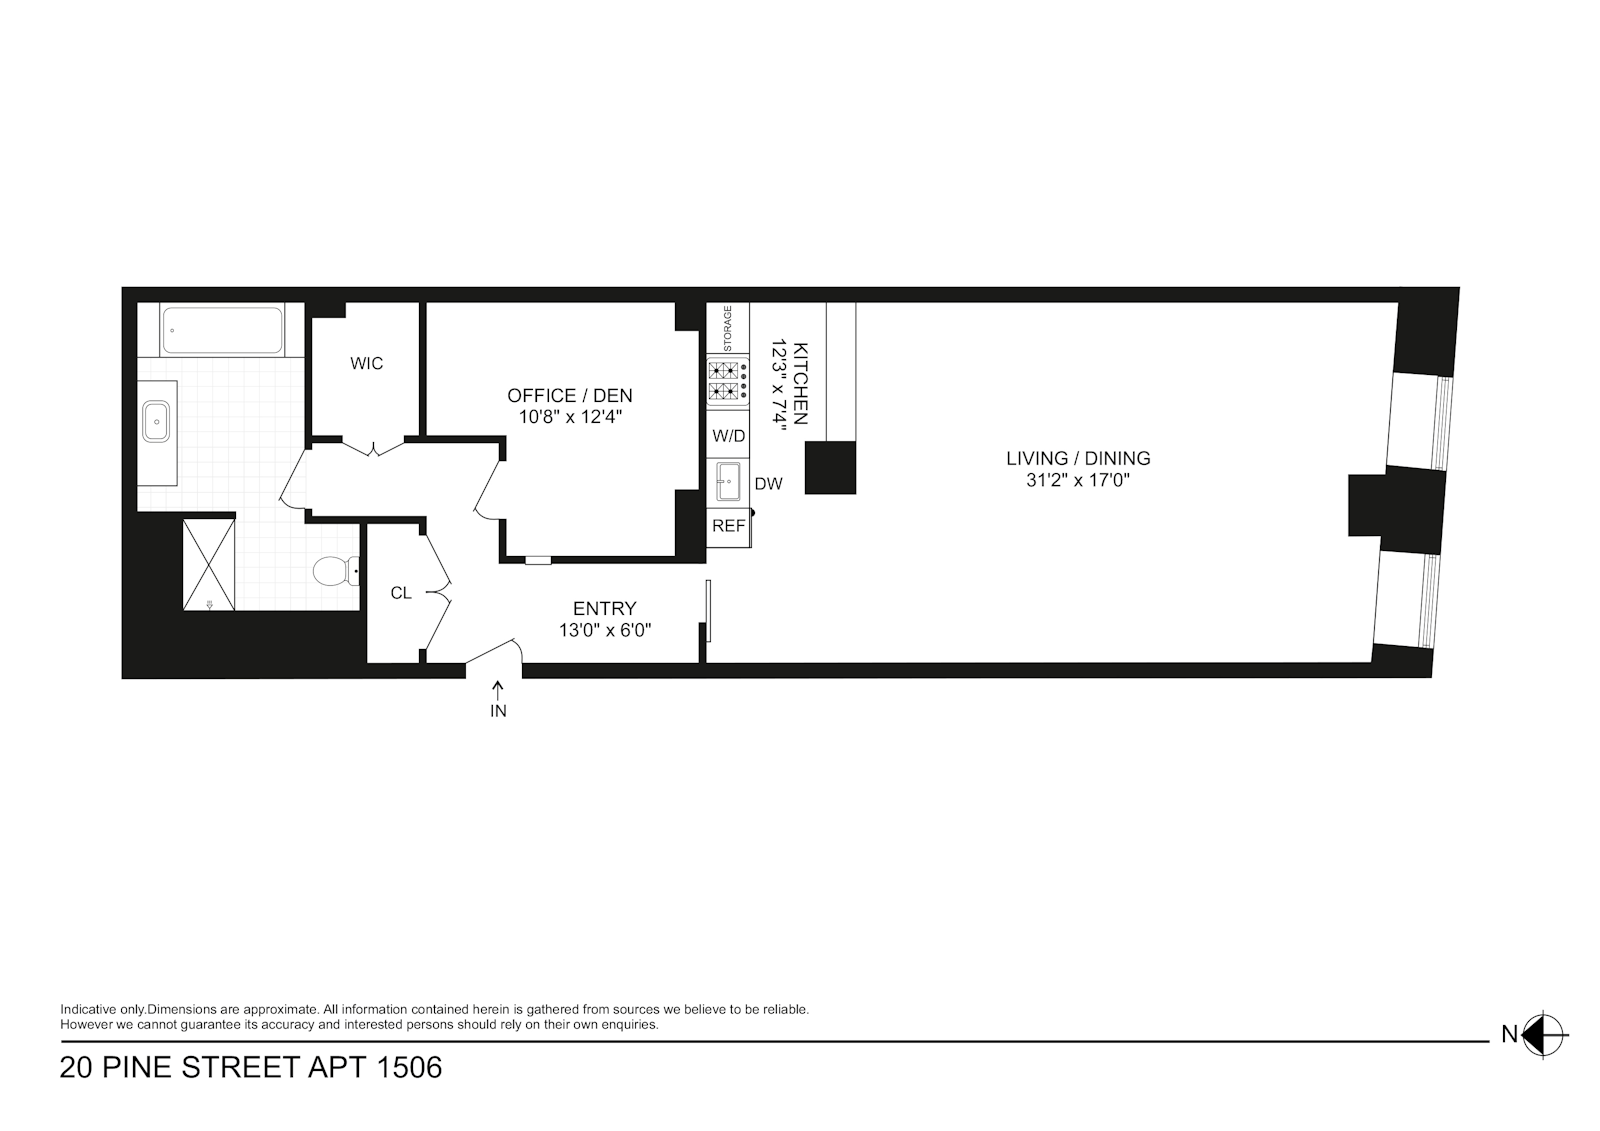 Floorplan for 20 Pine Street, 1506